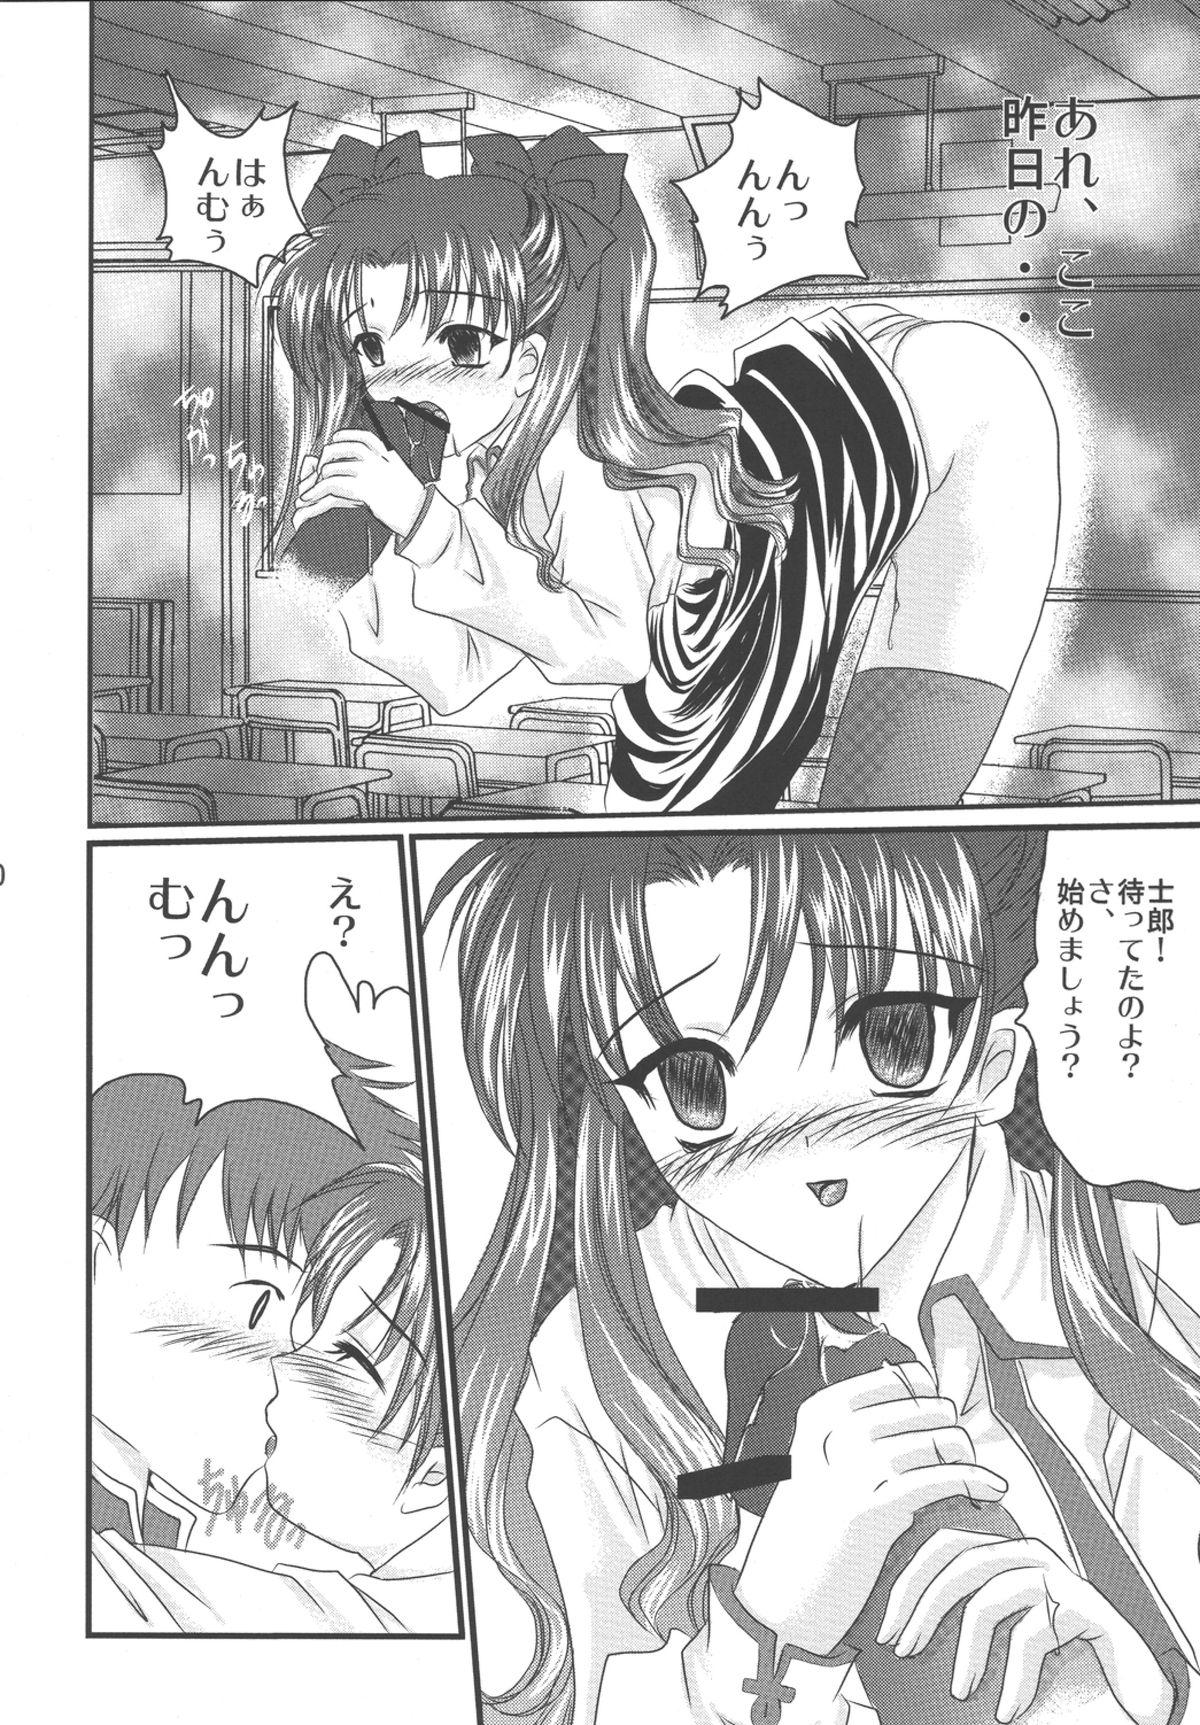 Pauzudo Gekkou no Naka de Nemure - Fate stay night Ex Gf - Page 9